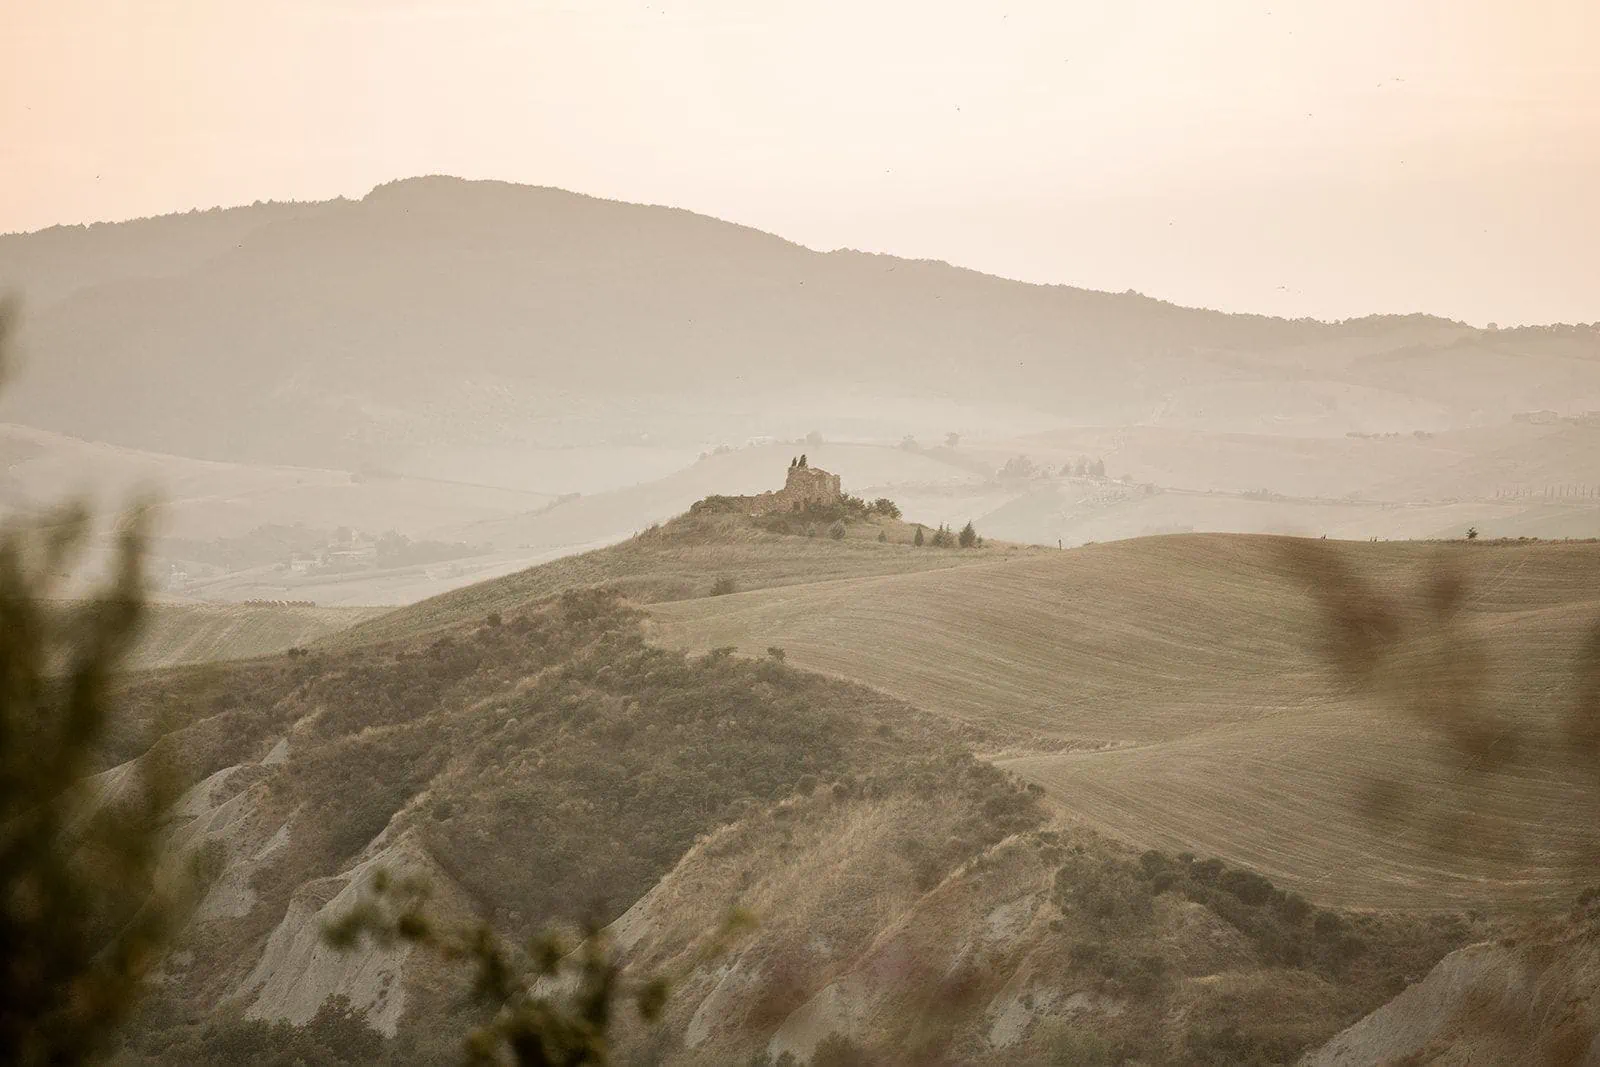 Tuscany Italy landscape